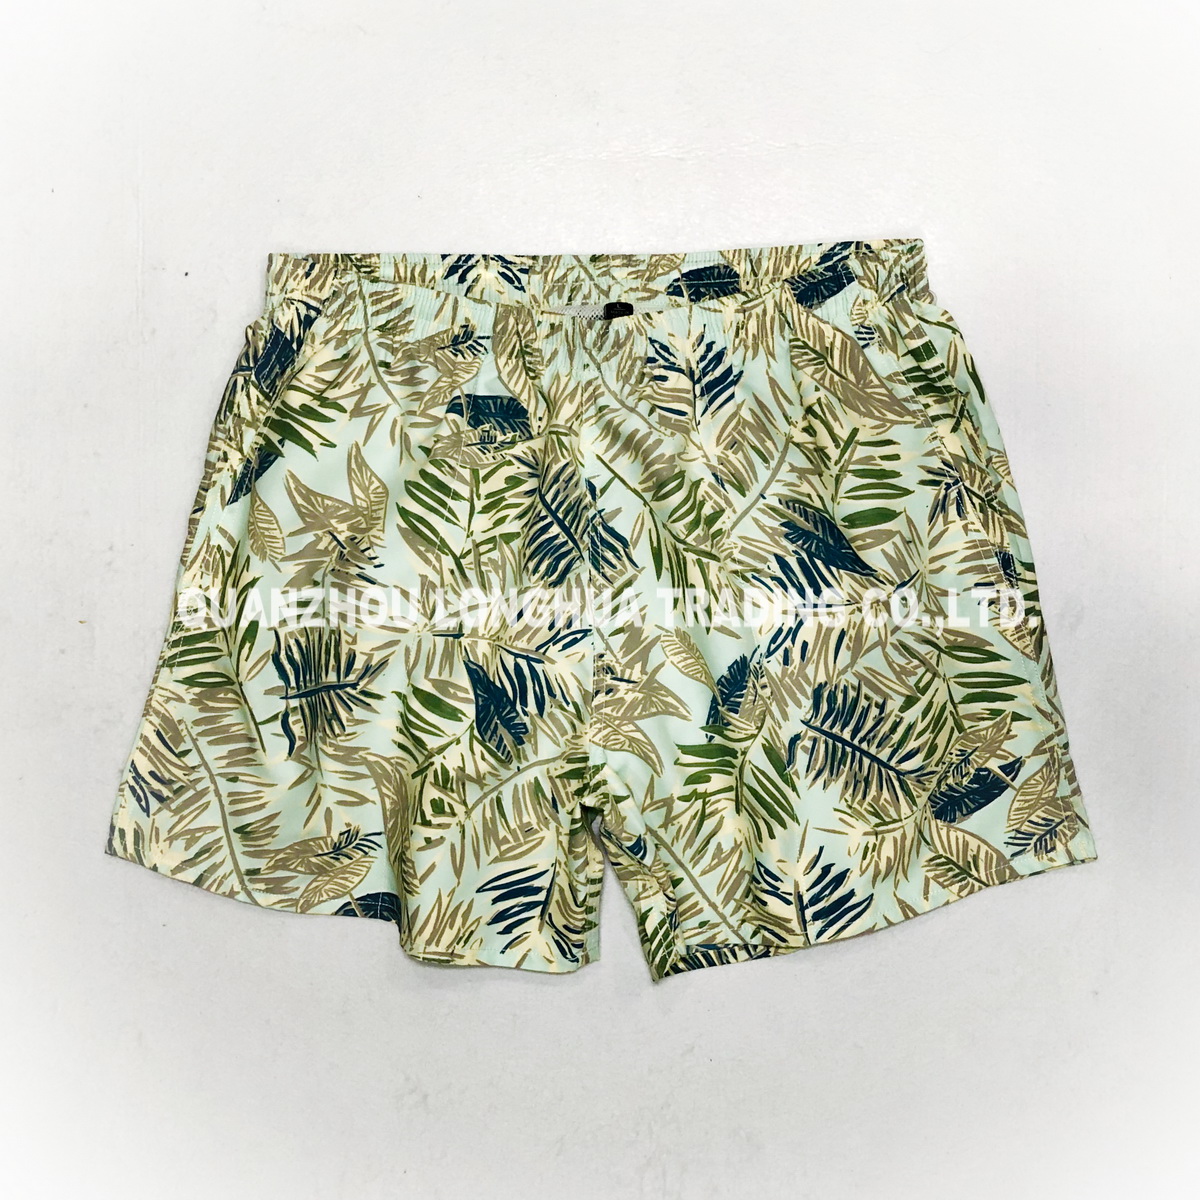 Men and Boys Polyester Printing Swimming Wear Beach Shorts Board Shorts Apparel Trousers Kids Swim Wear Pants